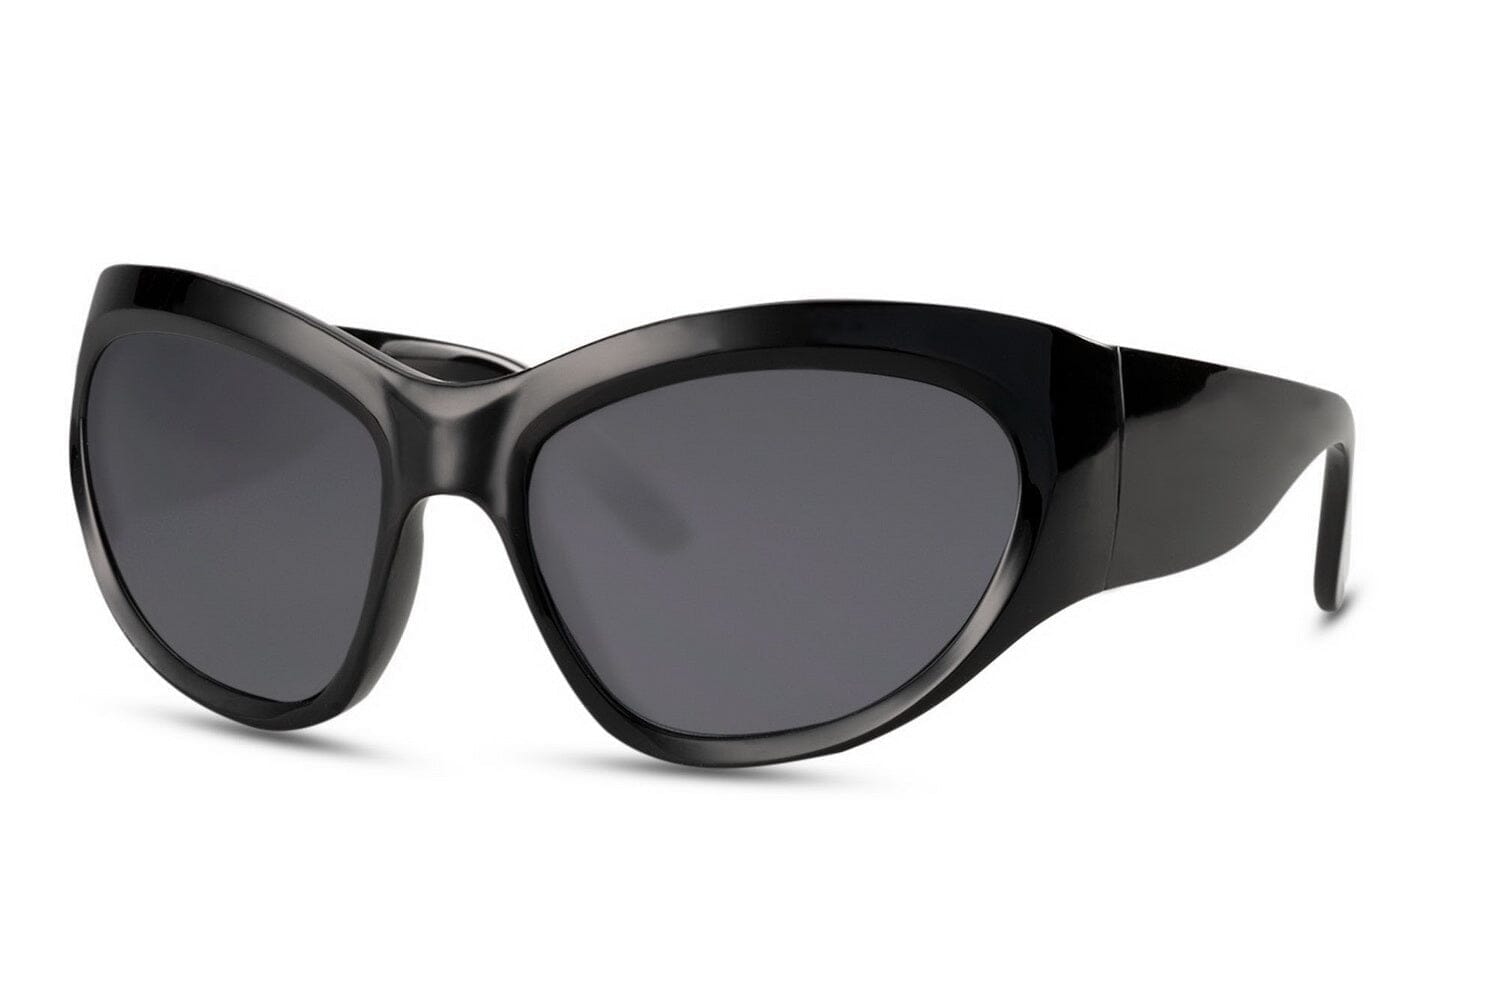 Black oversized shield sunglasses